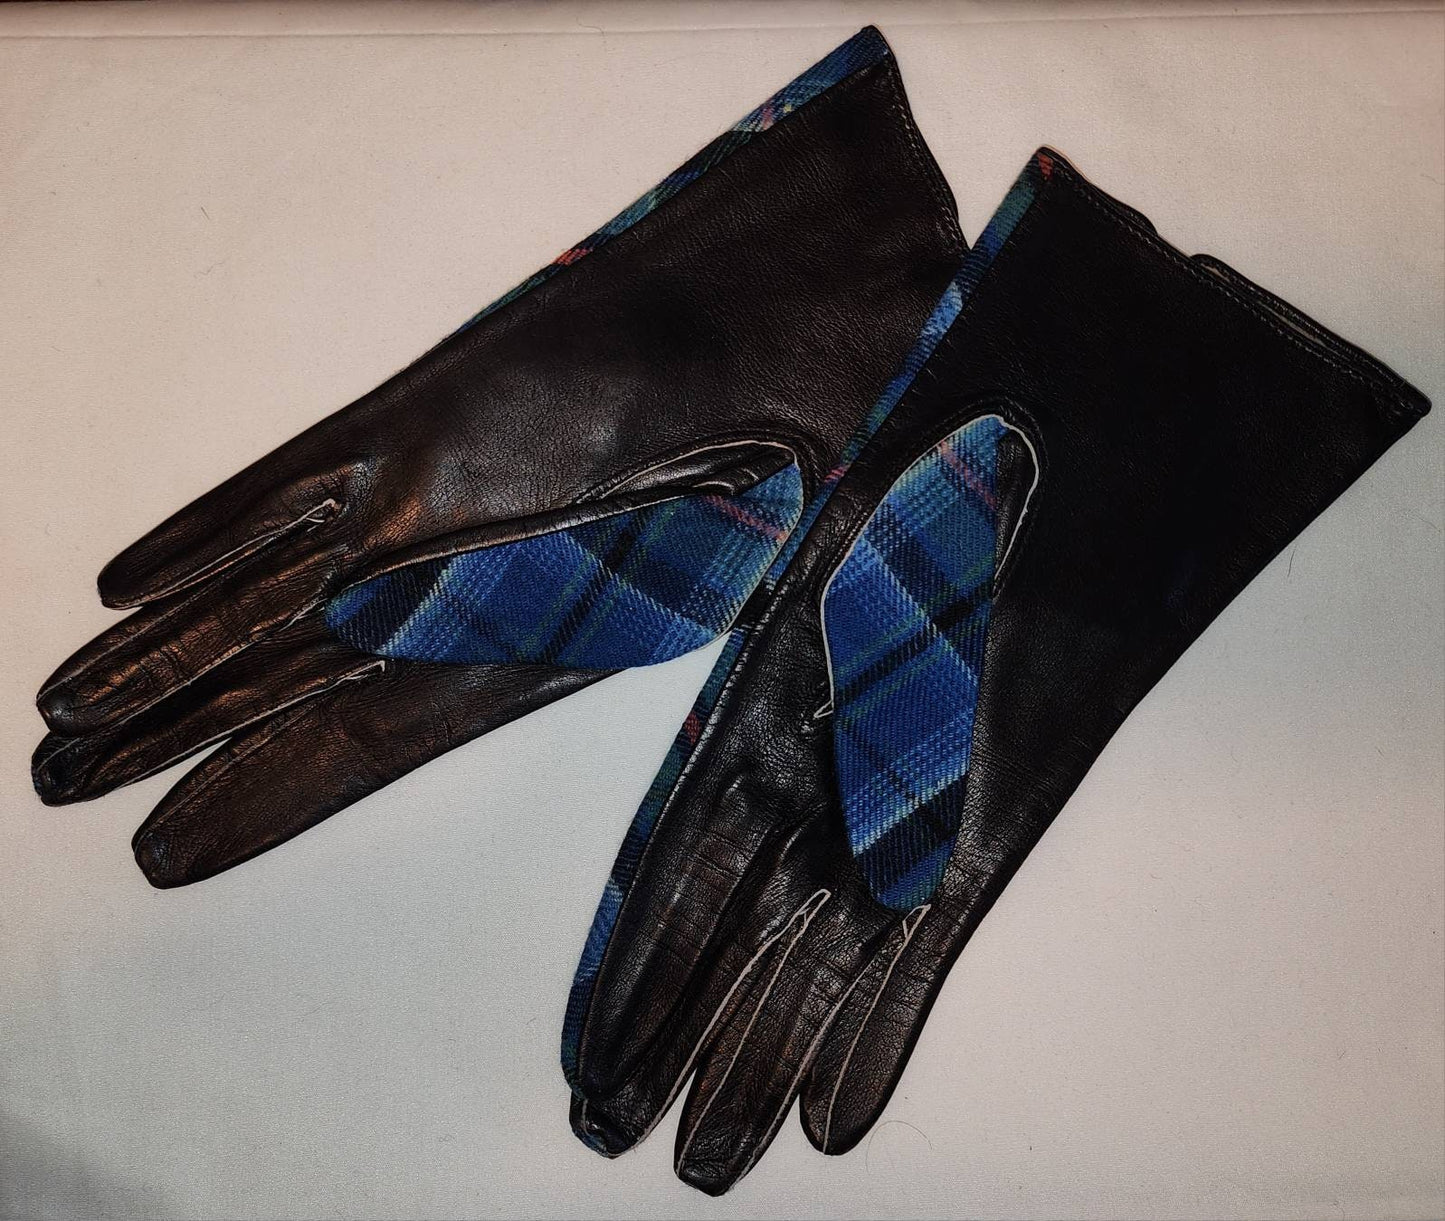 Unworn Vintage Gloves 1950s Blue Tartan Plaid Fabric Black Leather Gloves A Stuart Glove Made in England Mid Century Boho 7